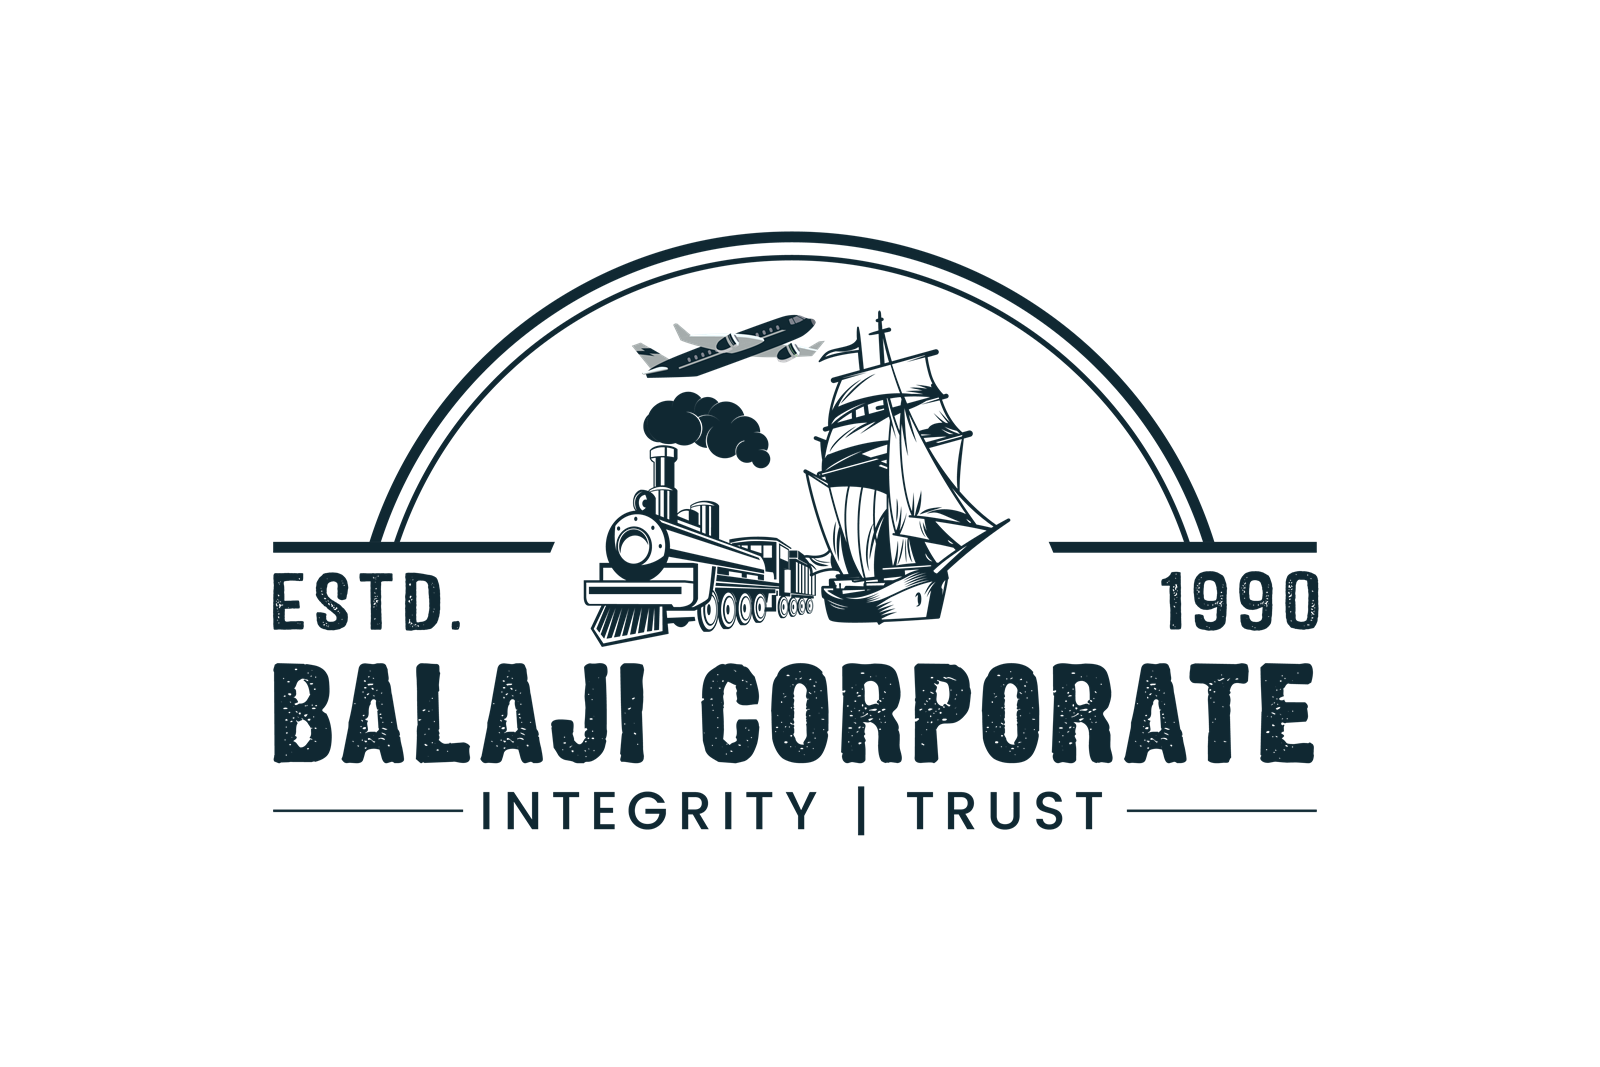 Balaji Corporate